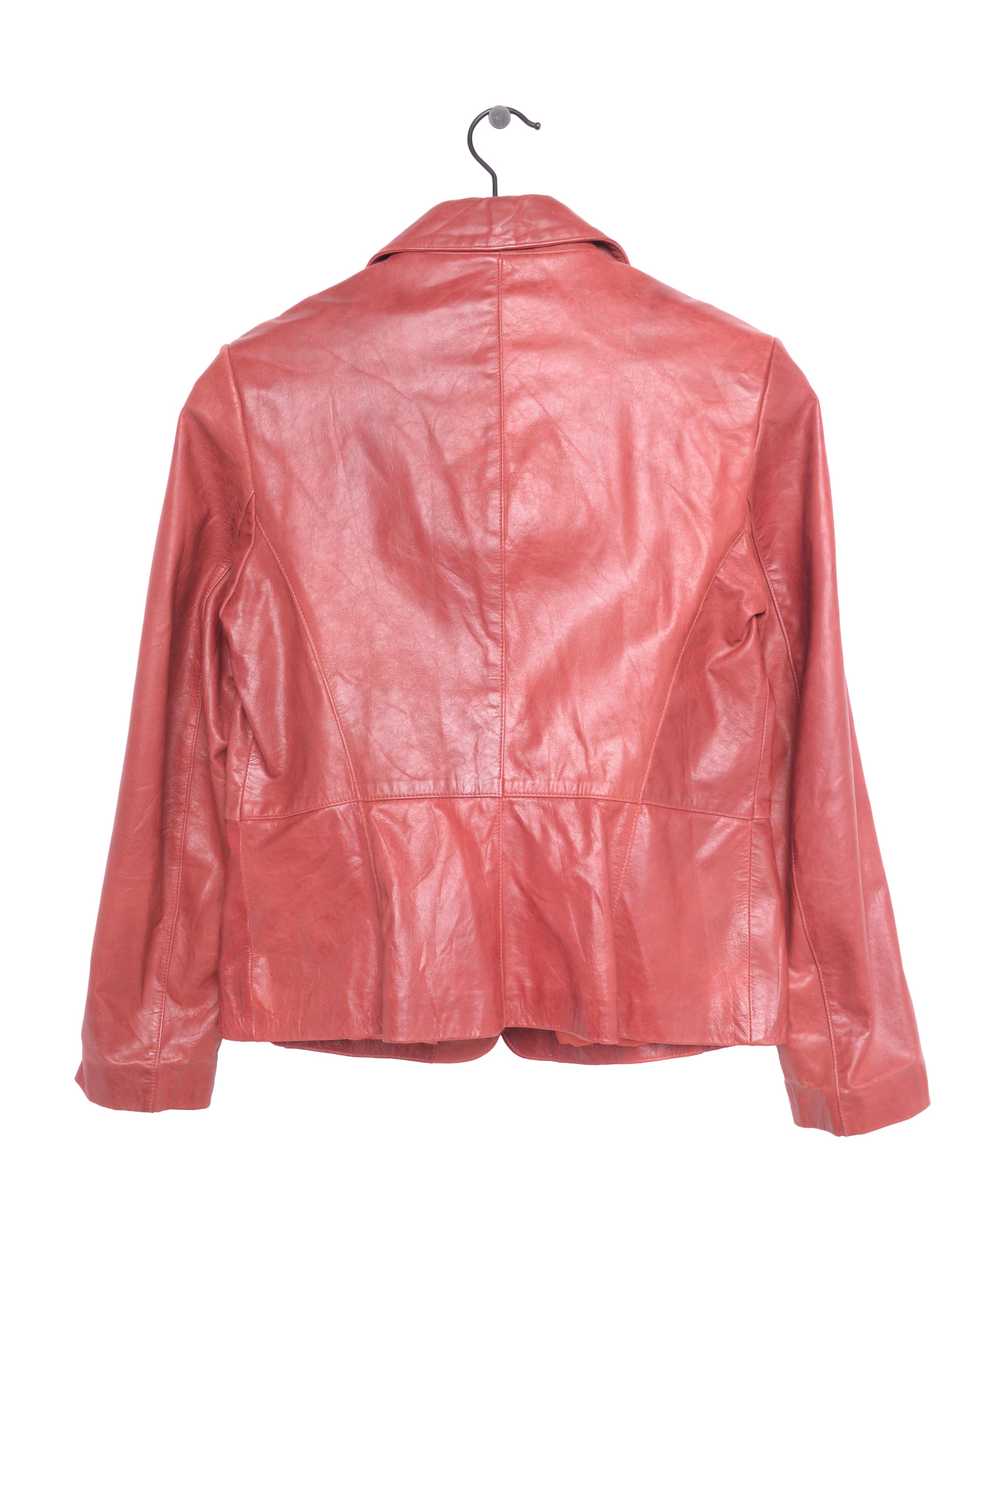 Rust Leather Jacket - image 2